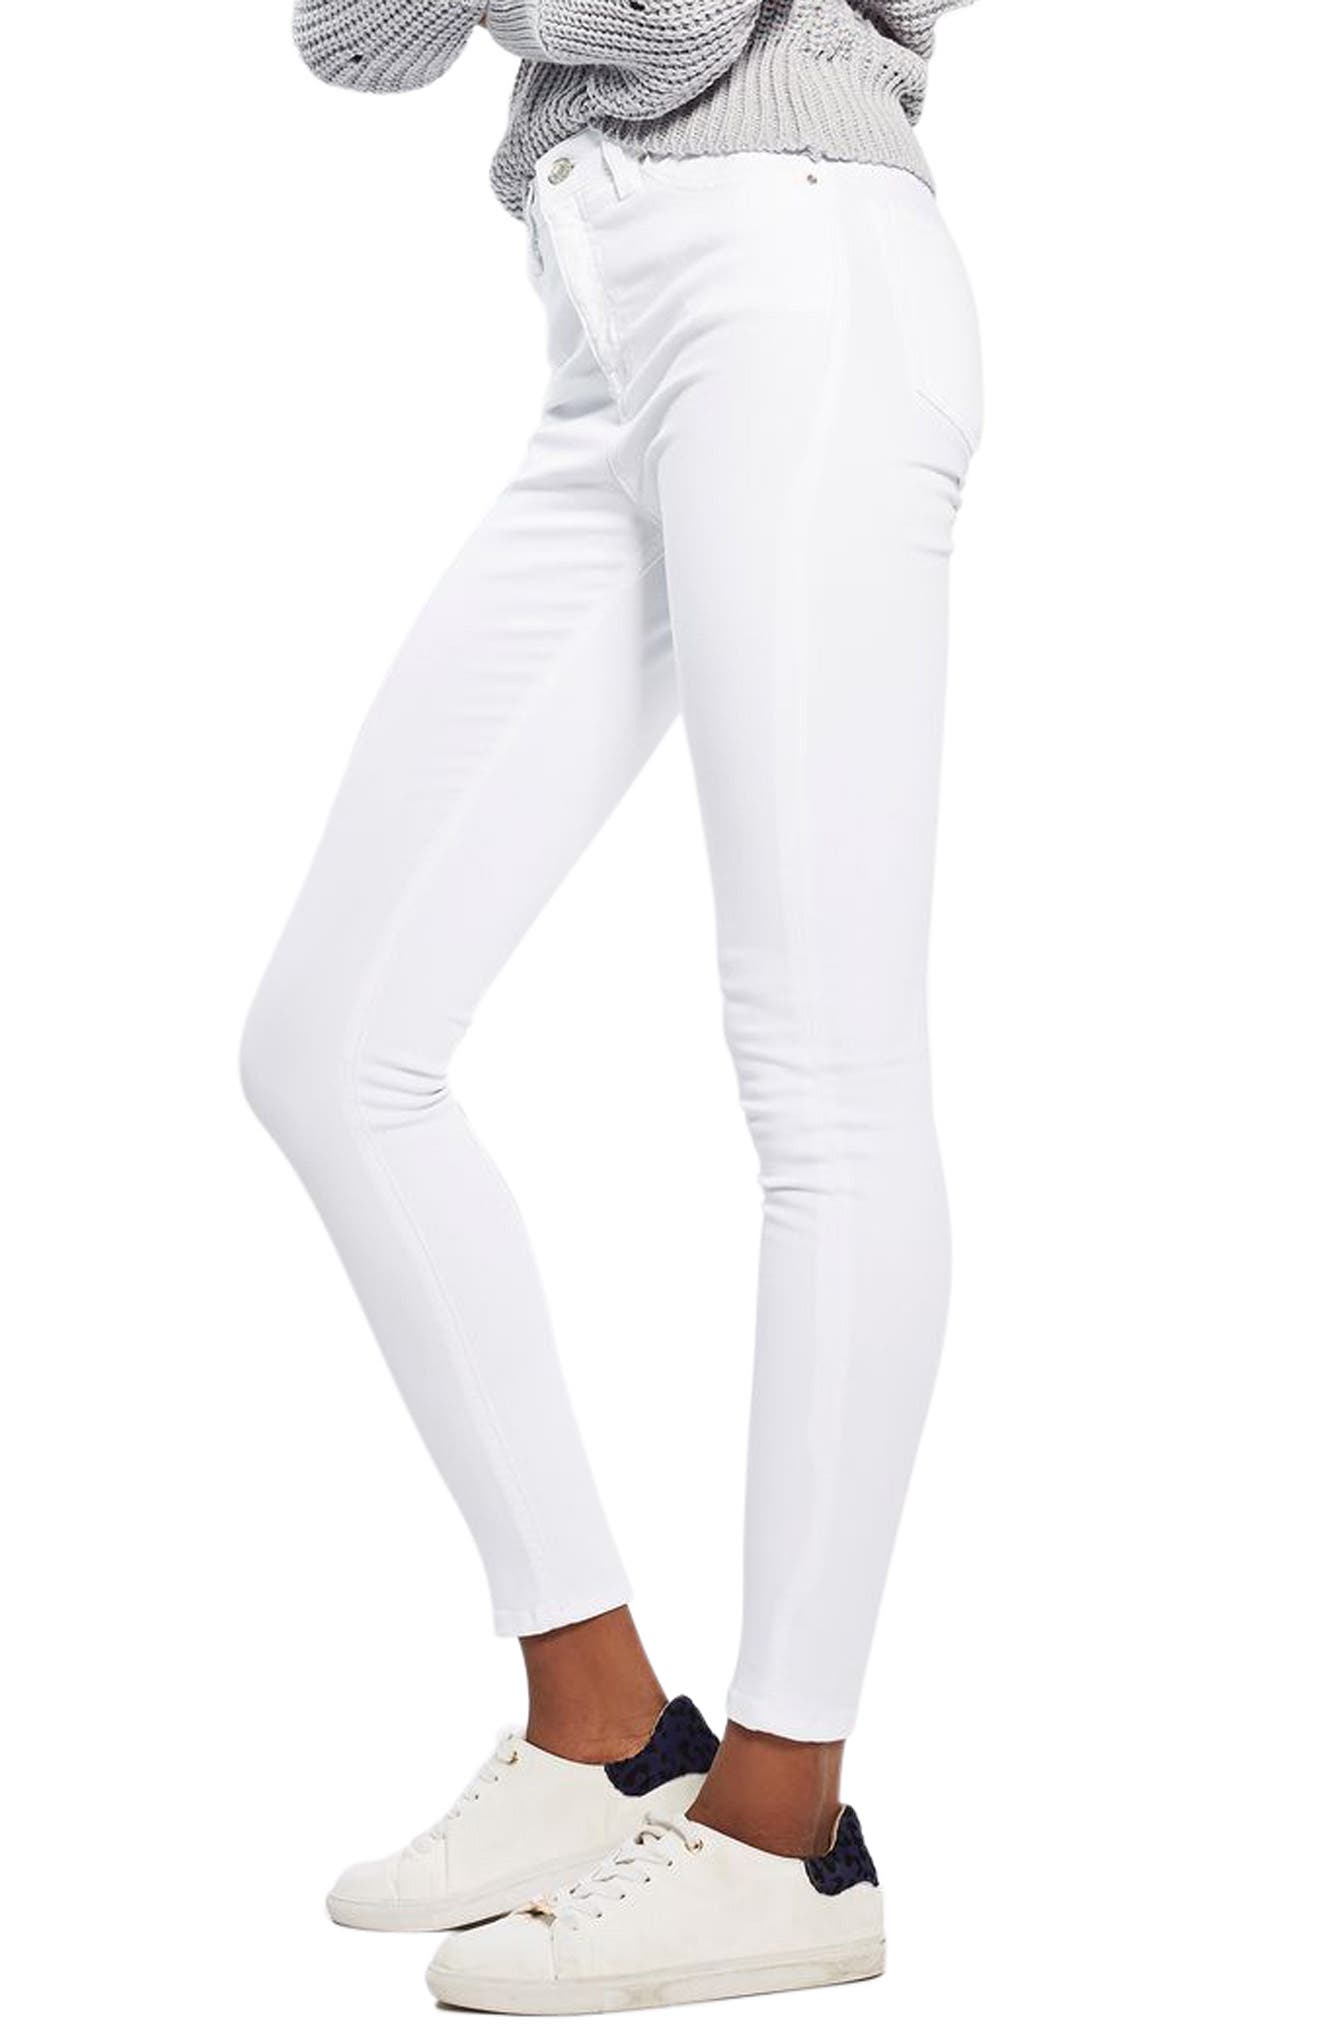 topshop white jeans jamie